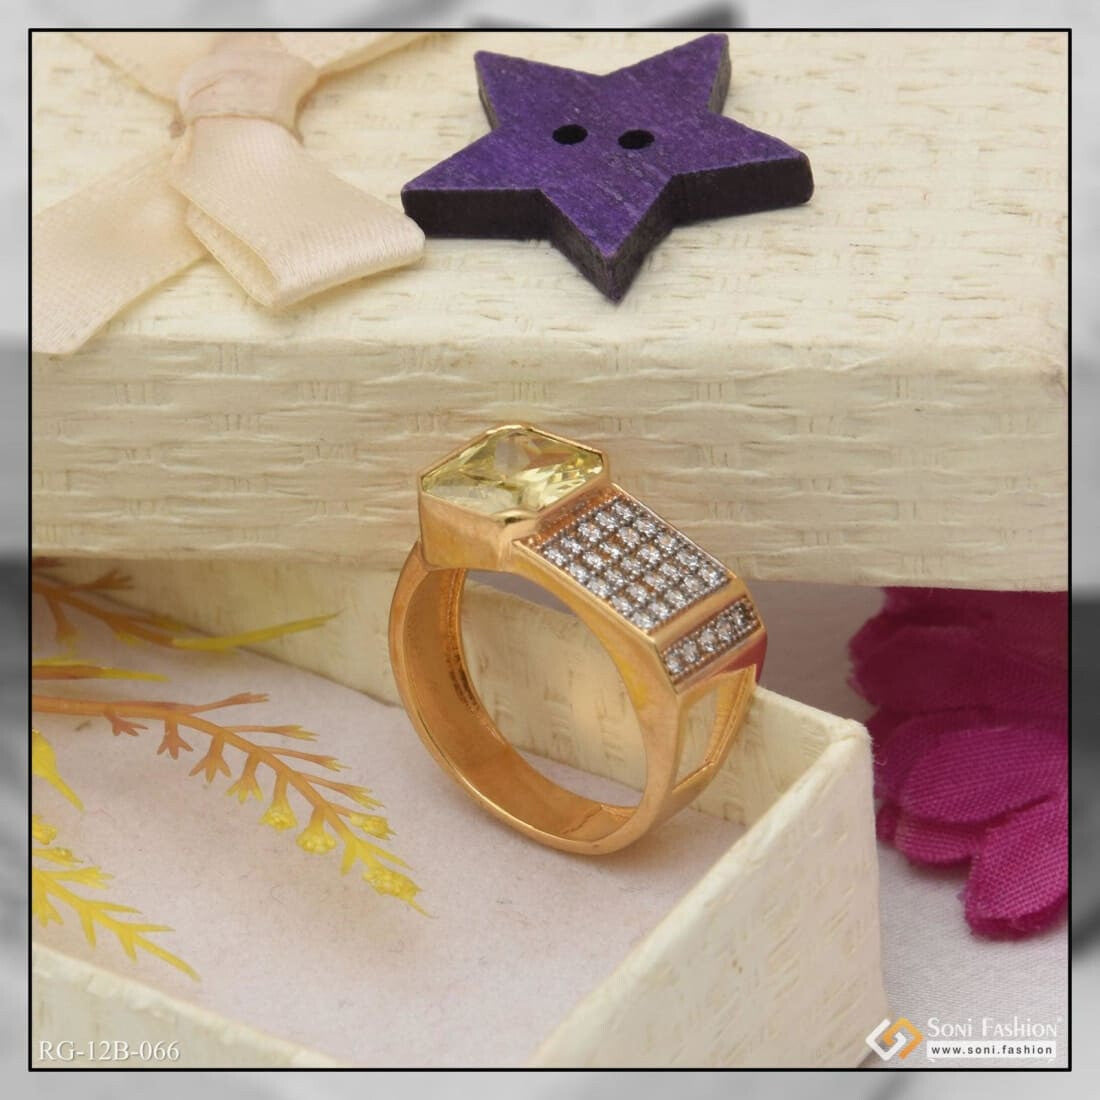 Flower Heart Rings - Acrylic Colored Resin Ring Set Women Fashion Cute  Jewelry | eBay